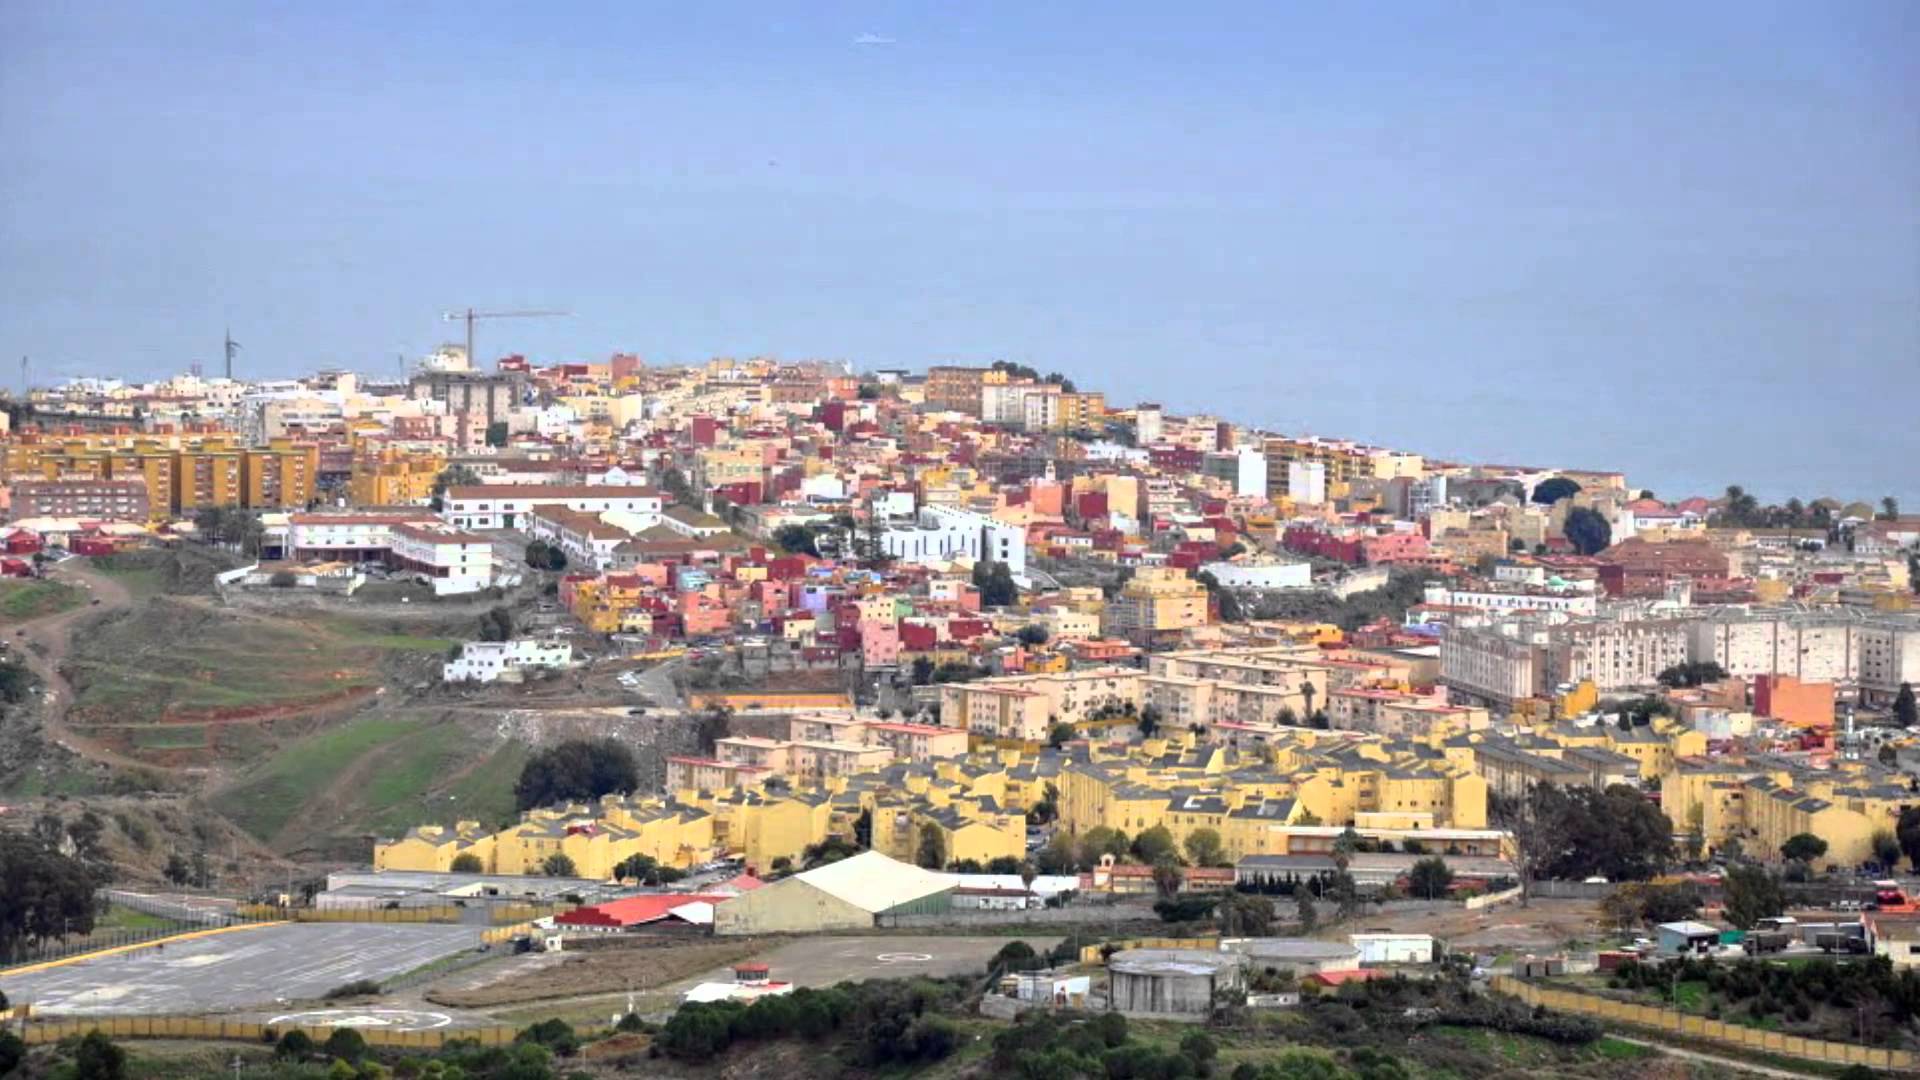 Architect PhD - Architecture Ceuta city in Spain Real Estate - YouTube